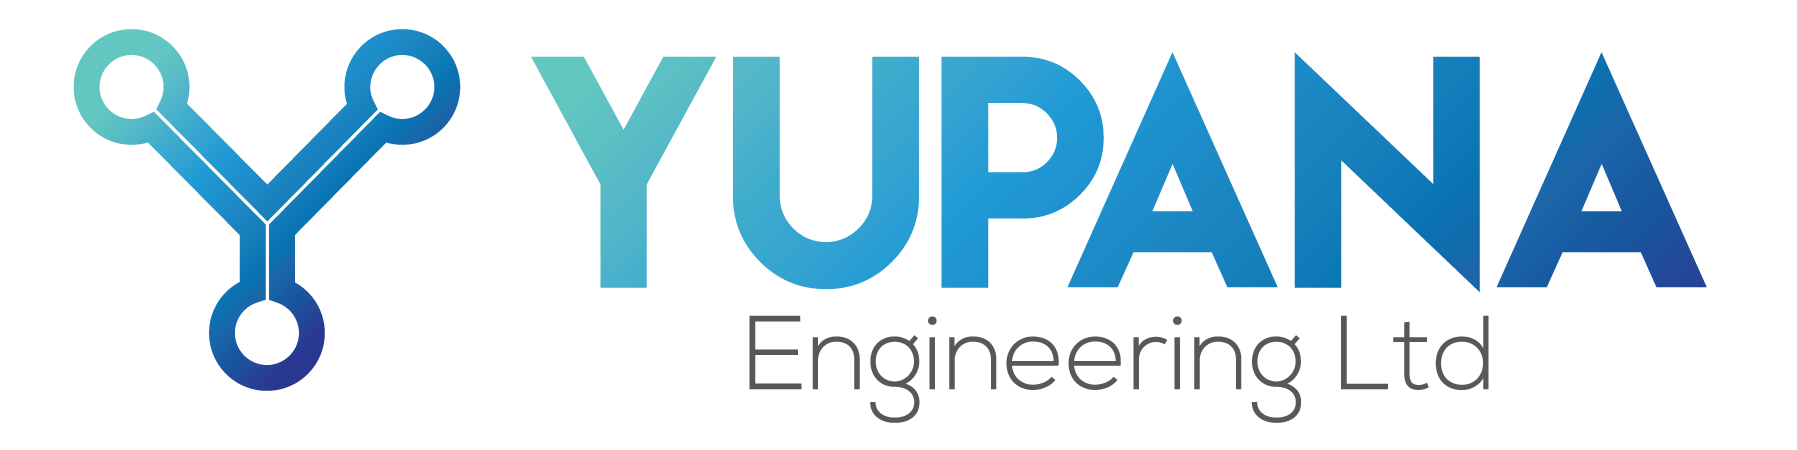 Yupana Engineering Ltd